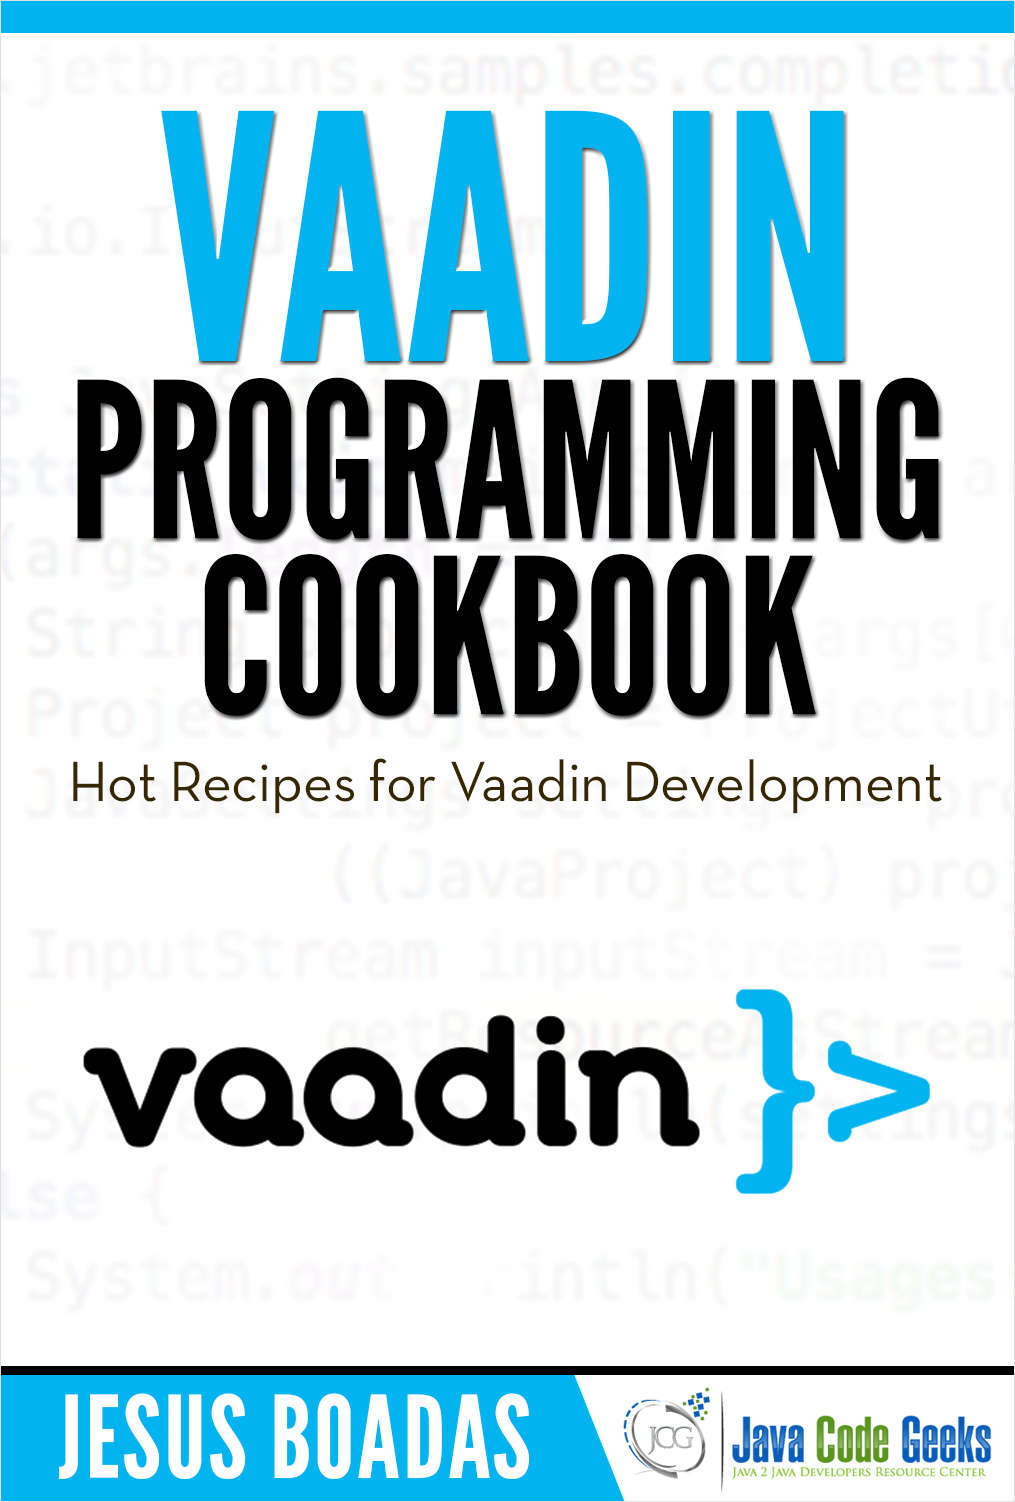 Vaadin Programming Cookbook